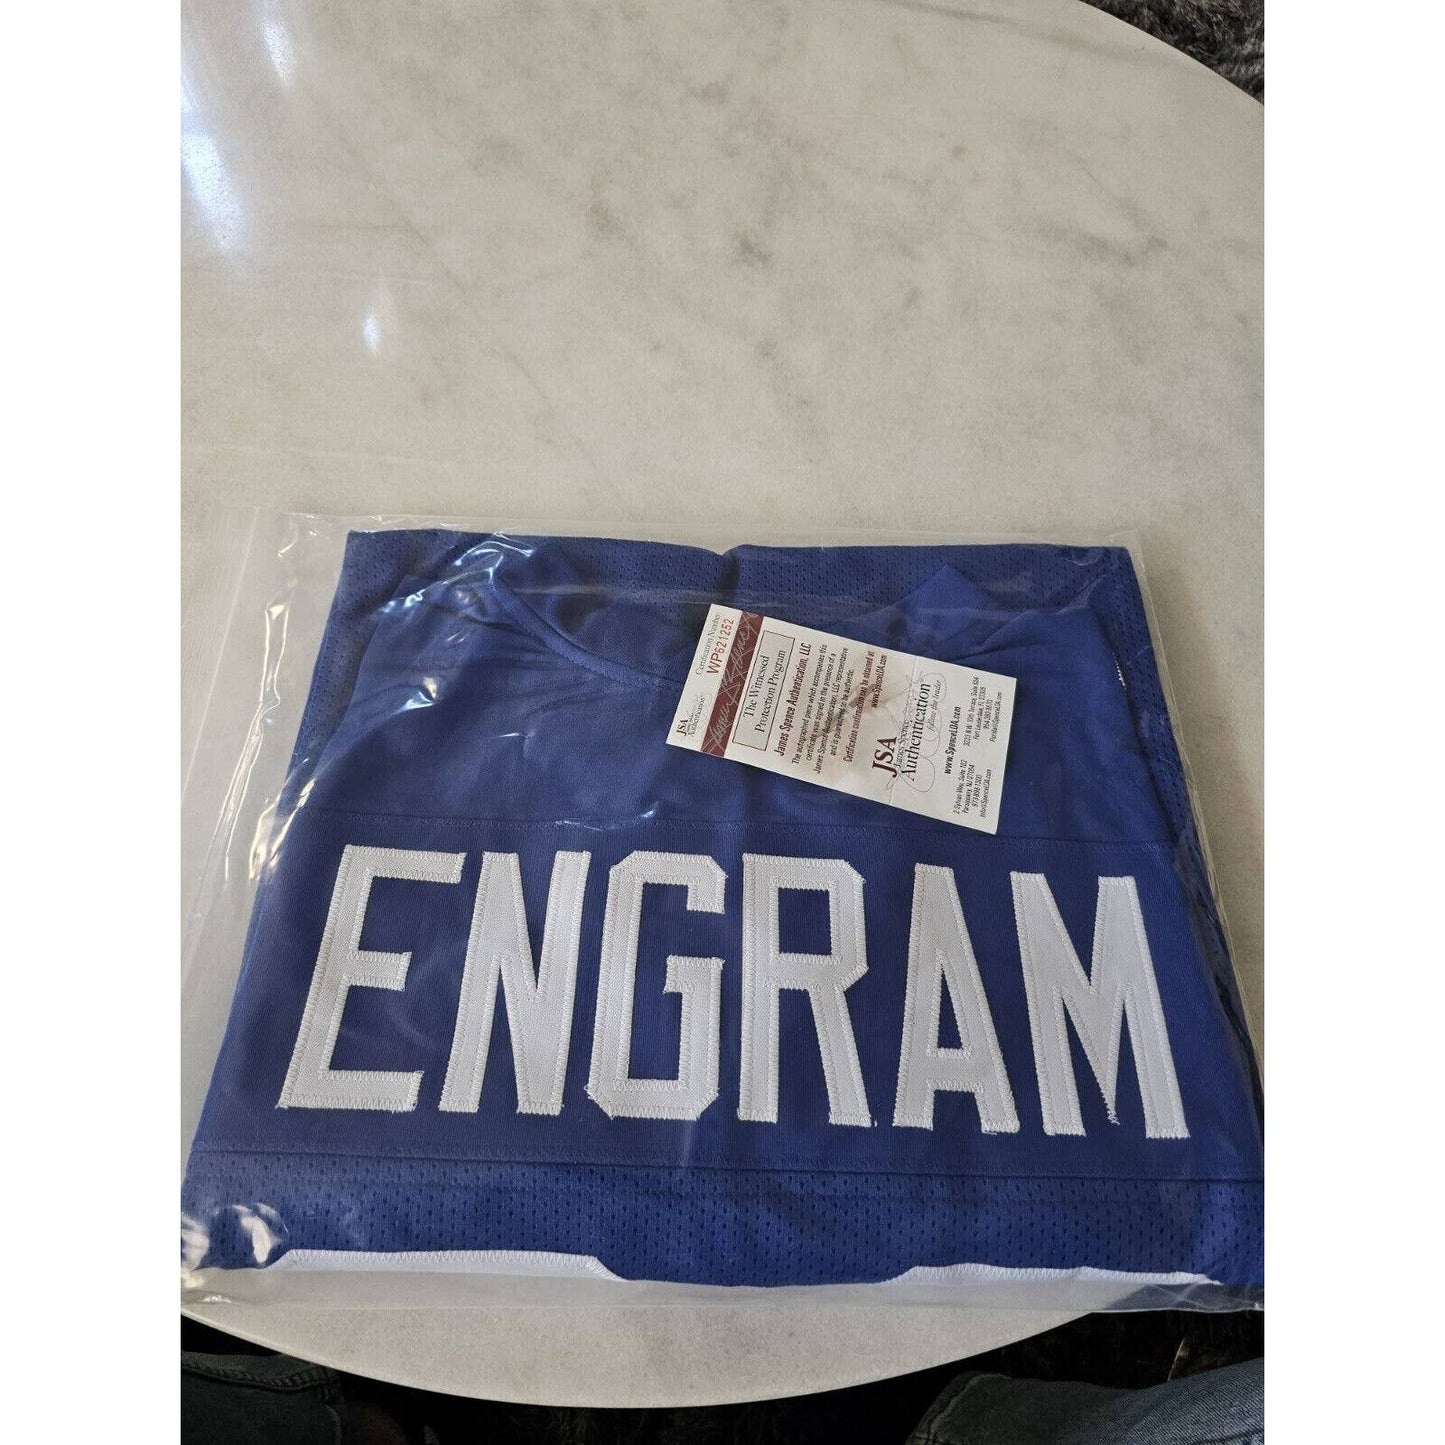 Evan Engram Autographed/Signed Jersey JSA COA New York Giants Star TE